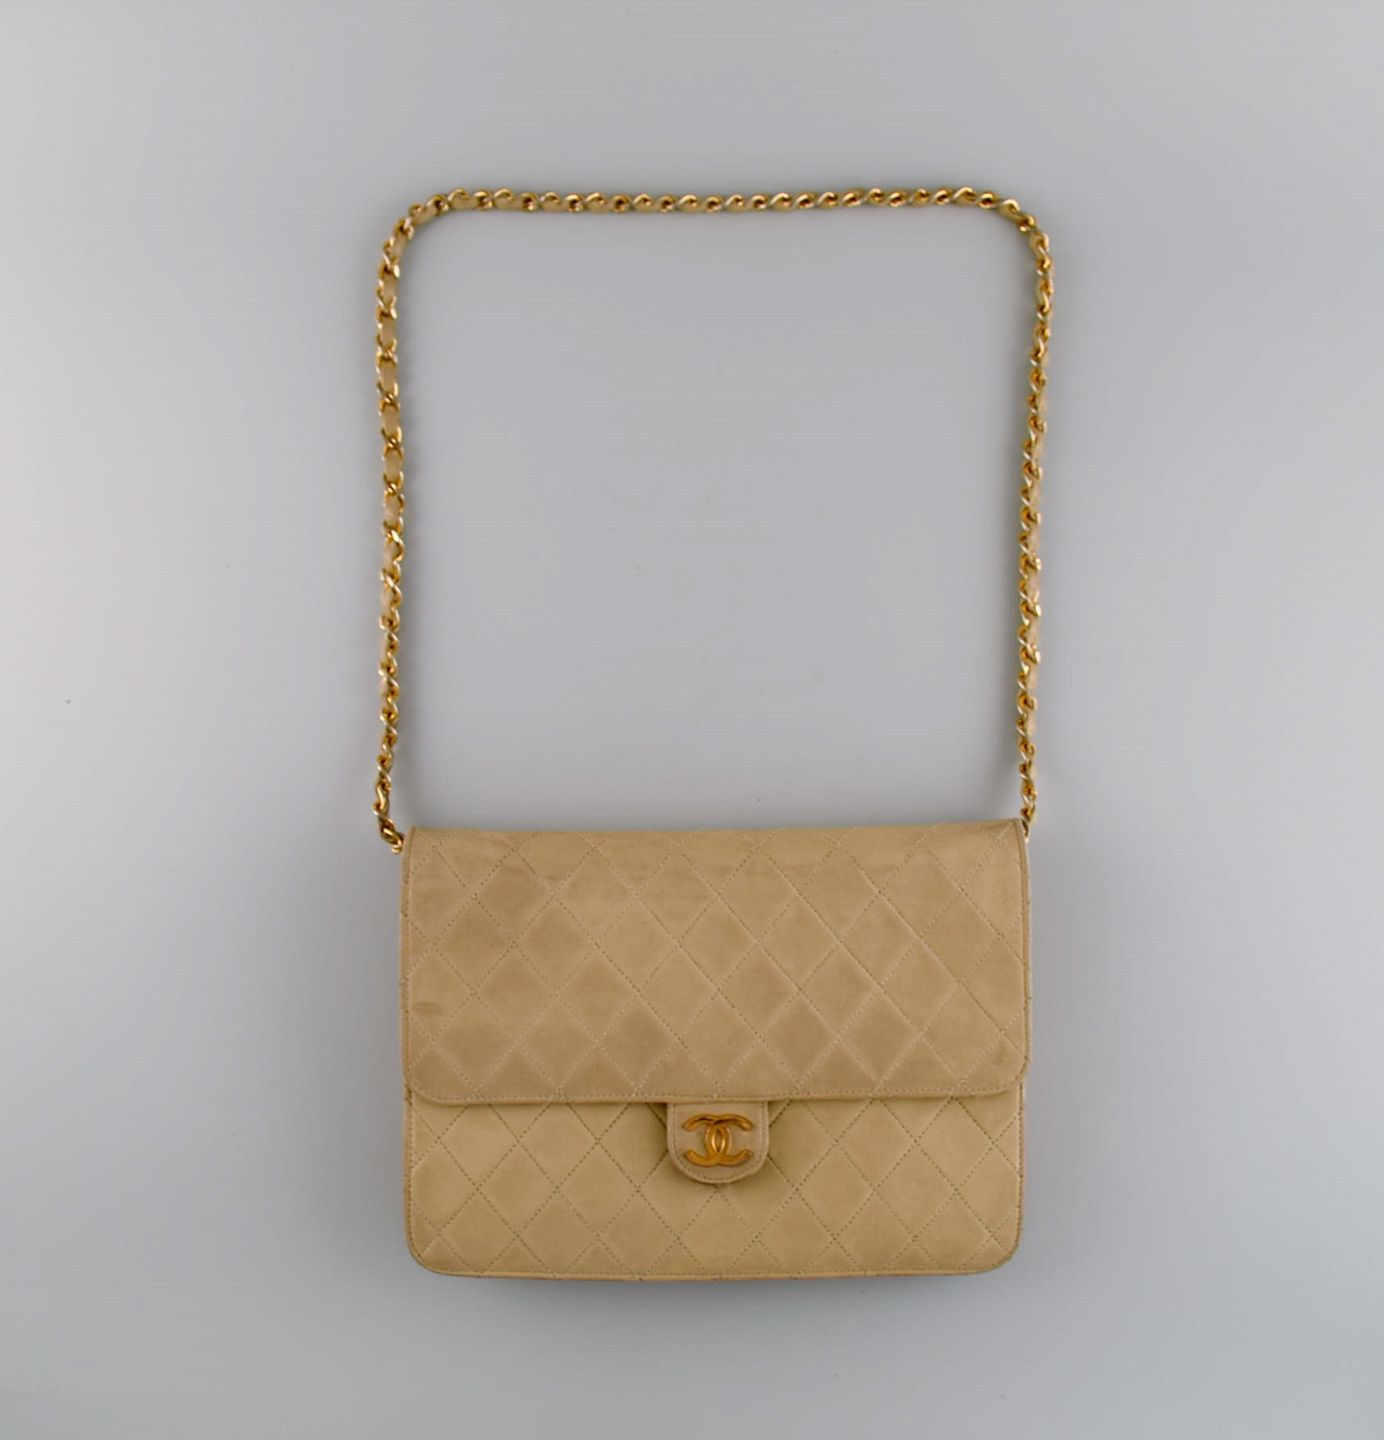 L Art - Vintage Chanel calfskin shoulder bag. Seams in checkered pat